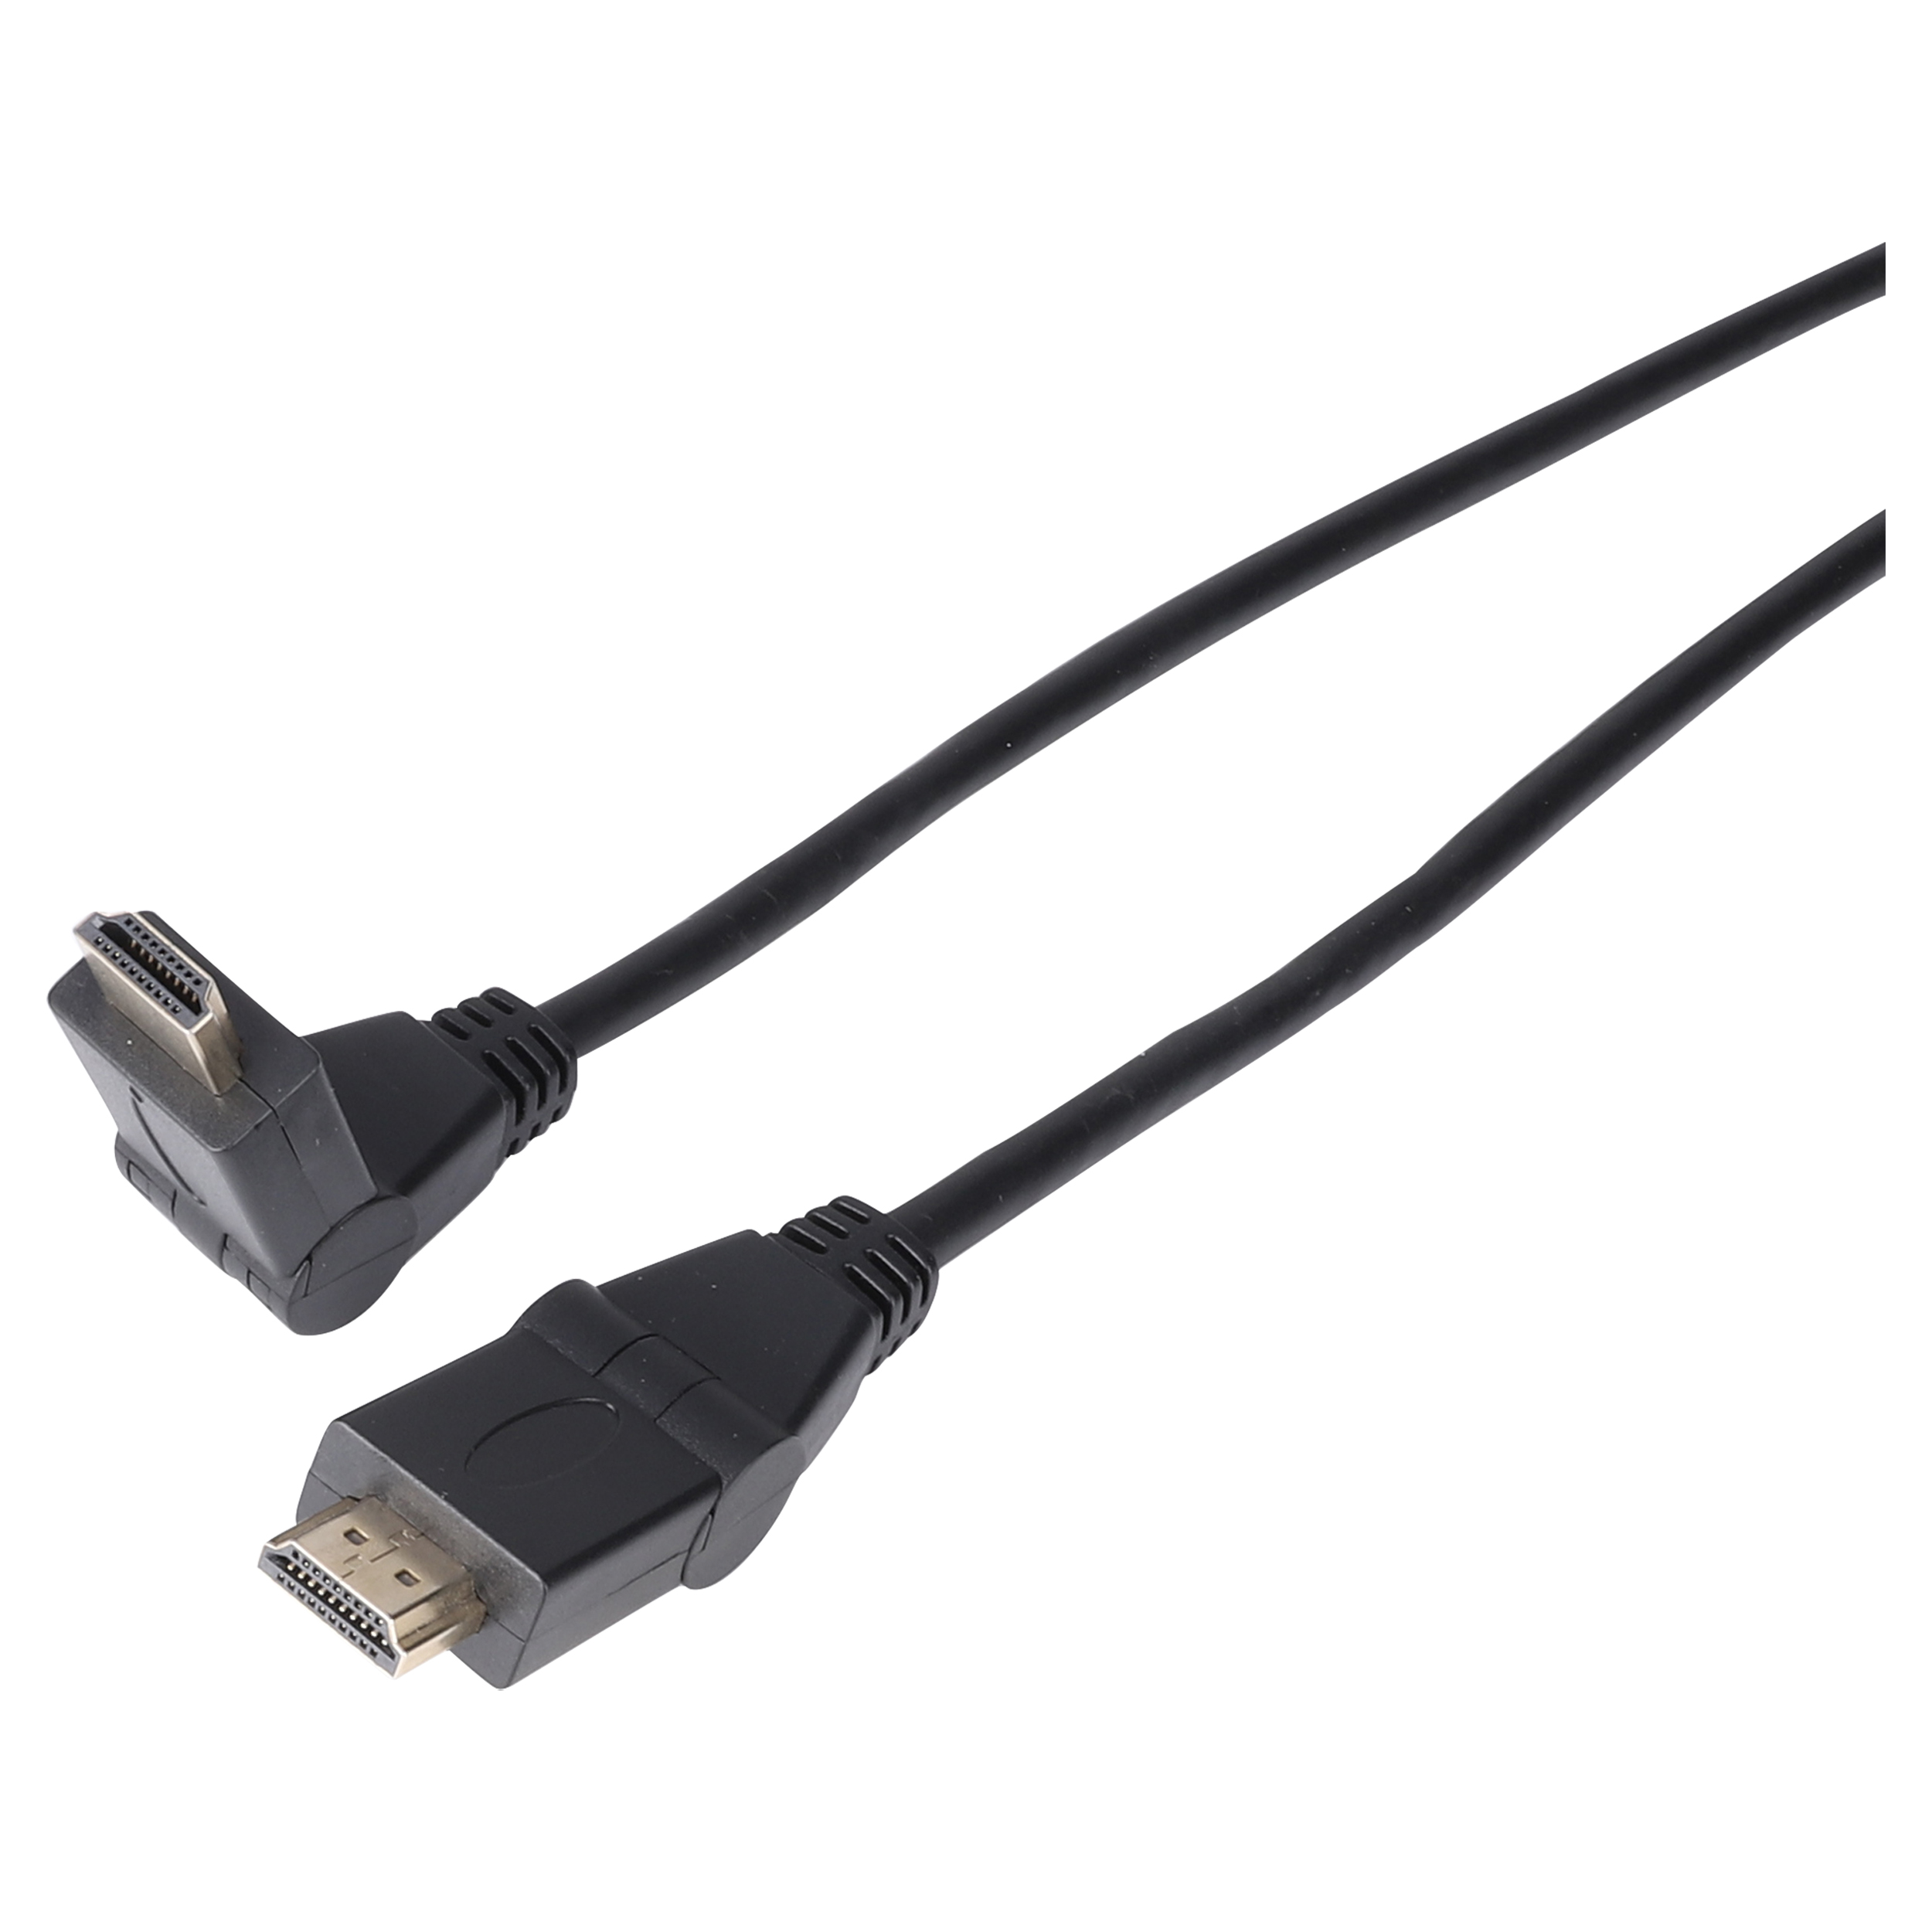 00.131.21 Q-Link  HDMI kabel high speed - 2 m - zwart